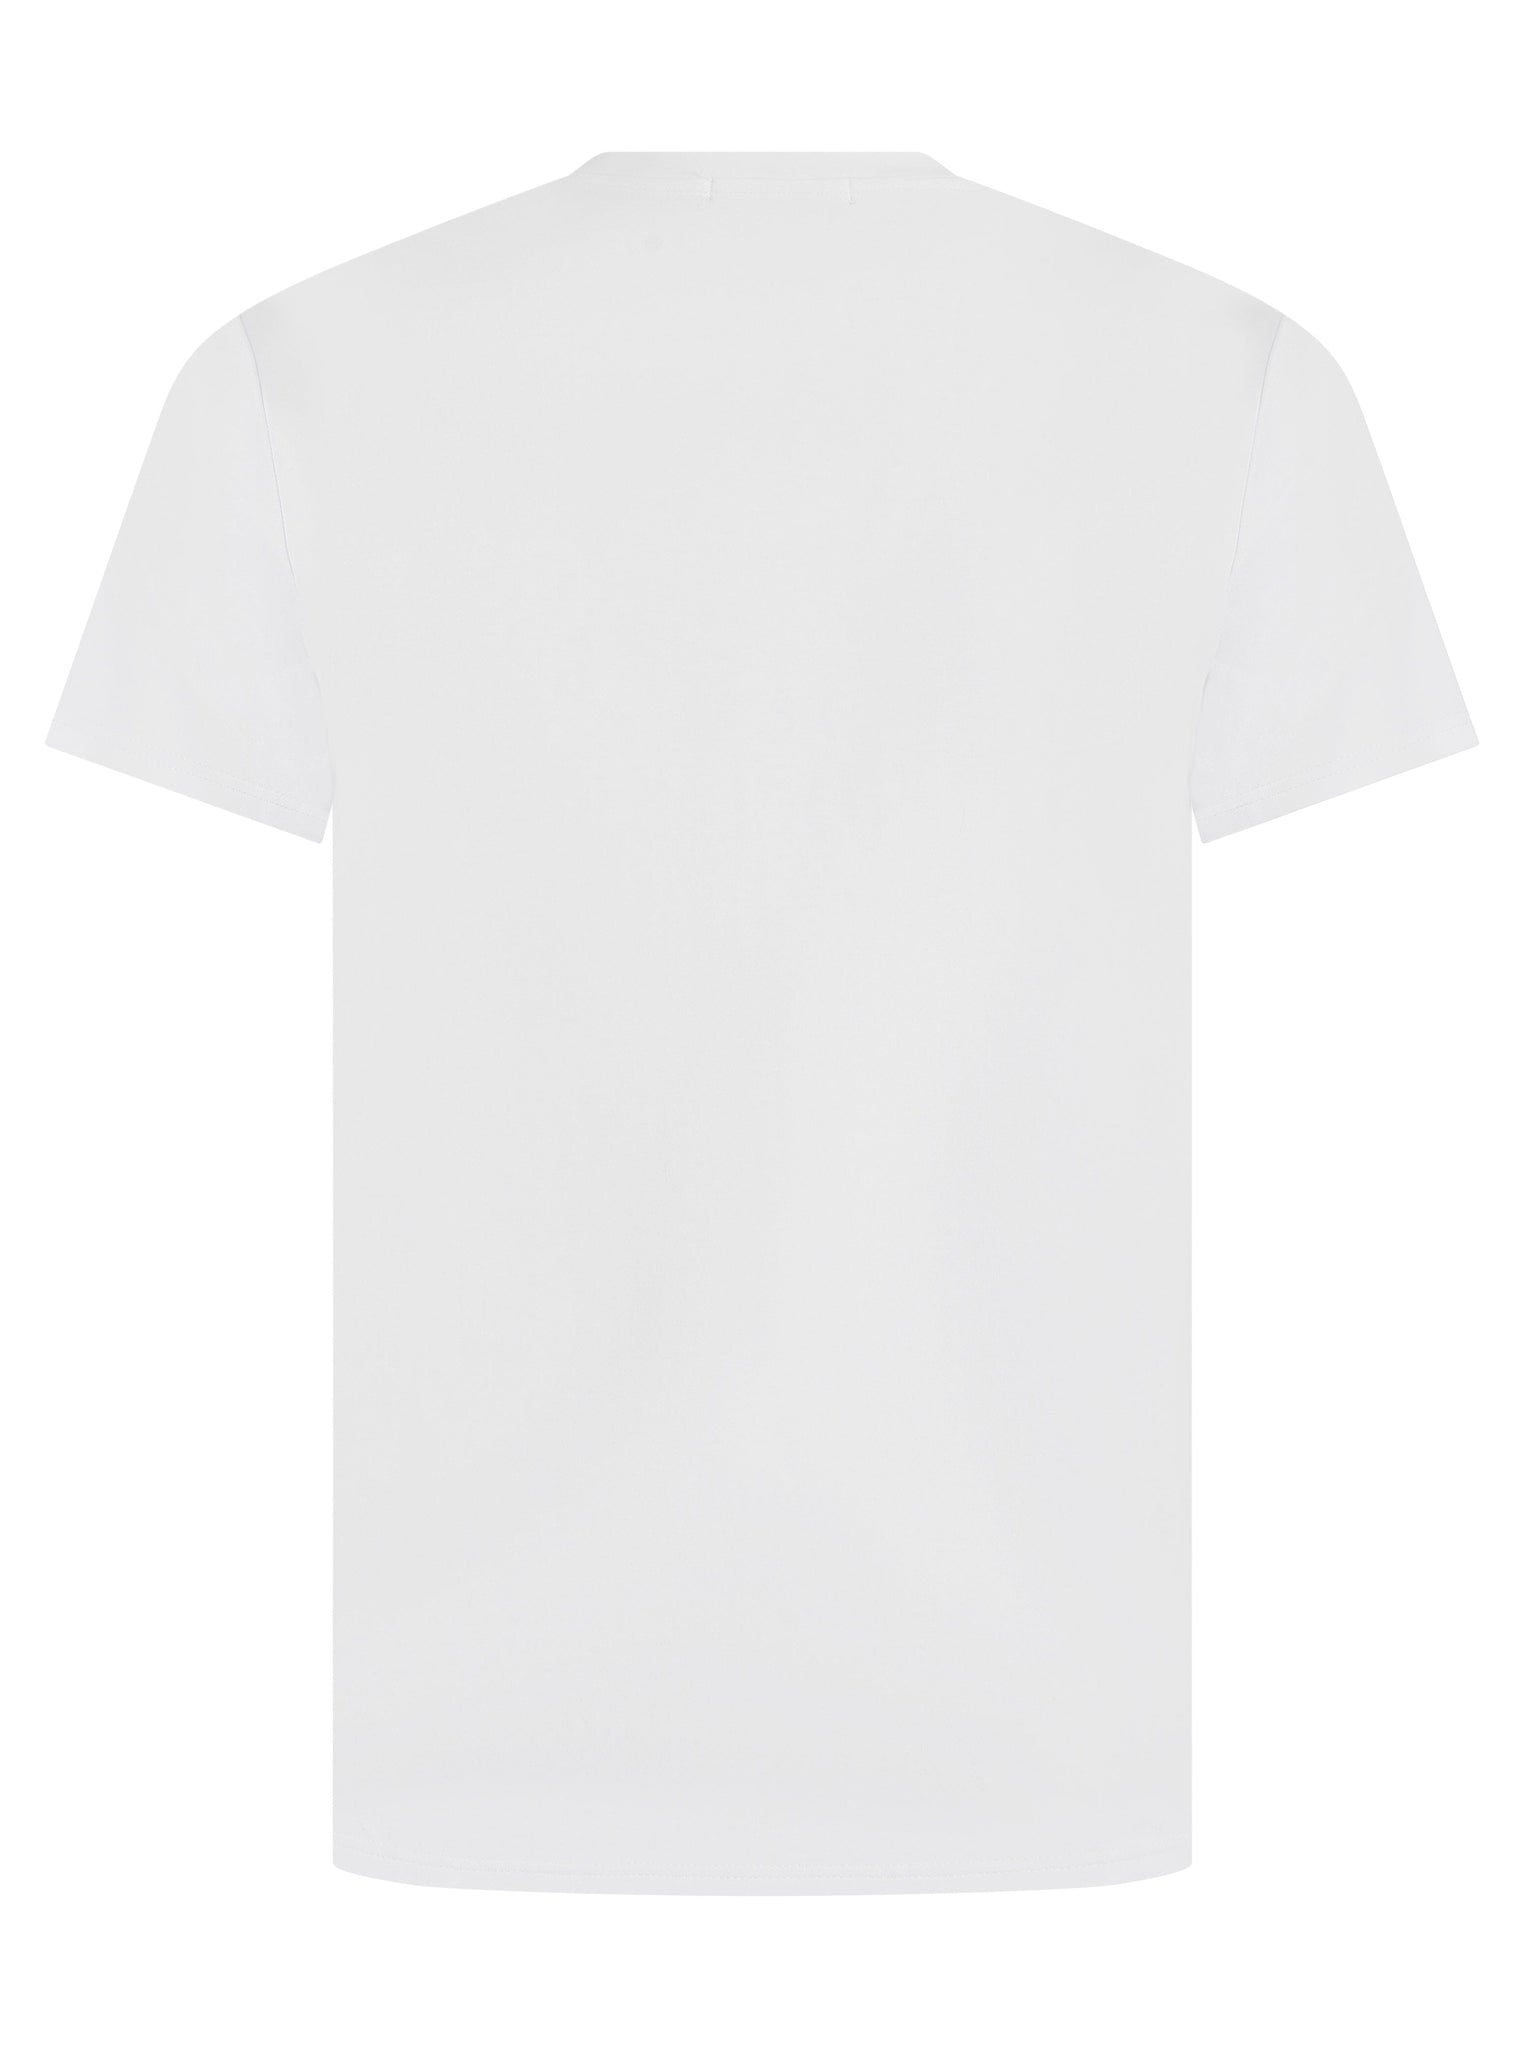 Tech Pocket T-shirt White/Dove